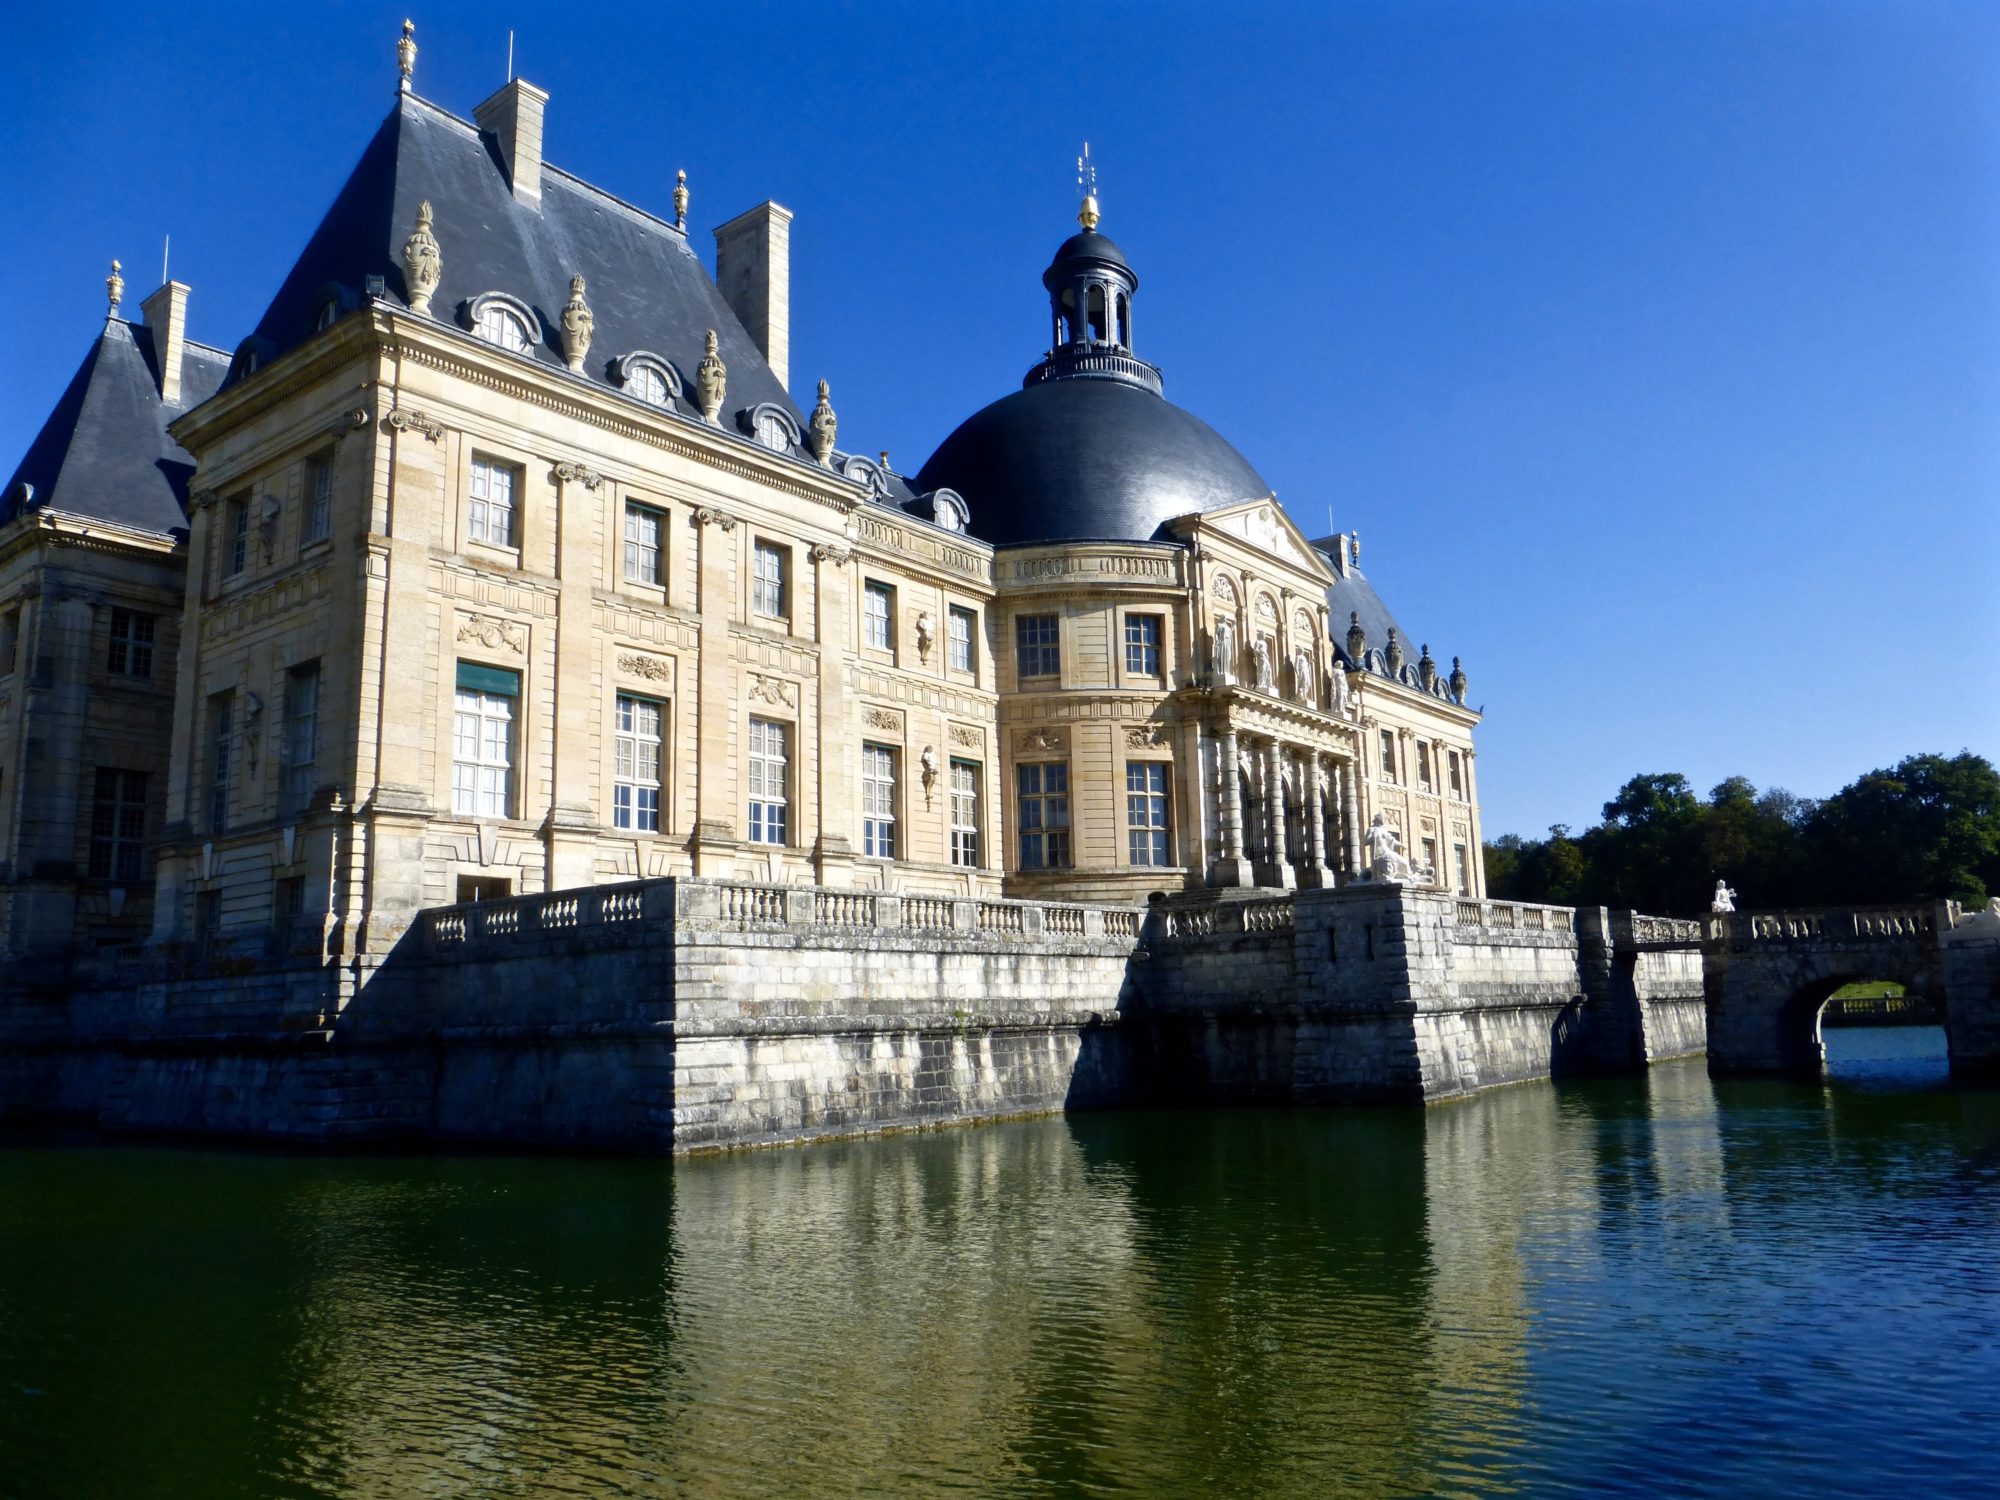 Is Château de Vaux-le-Vicomte worth a visit? One day trip to the